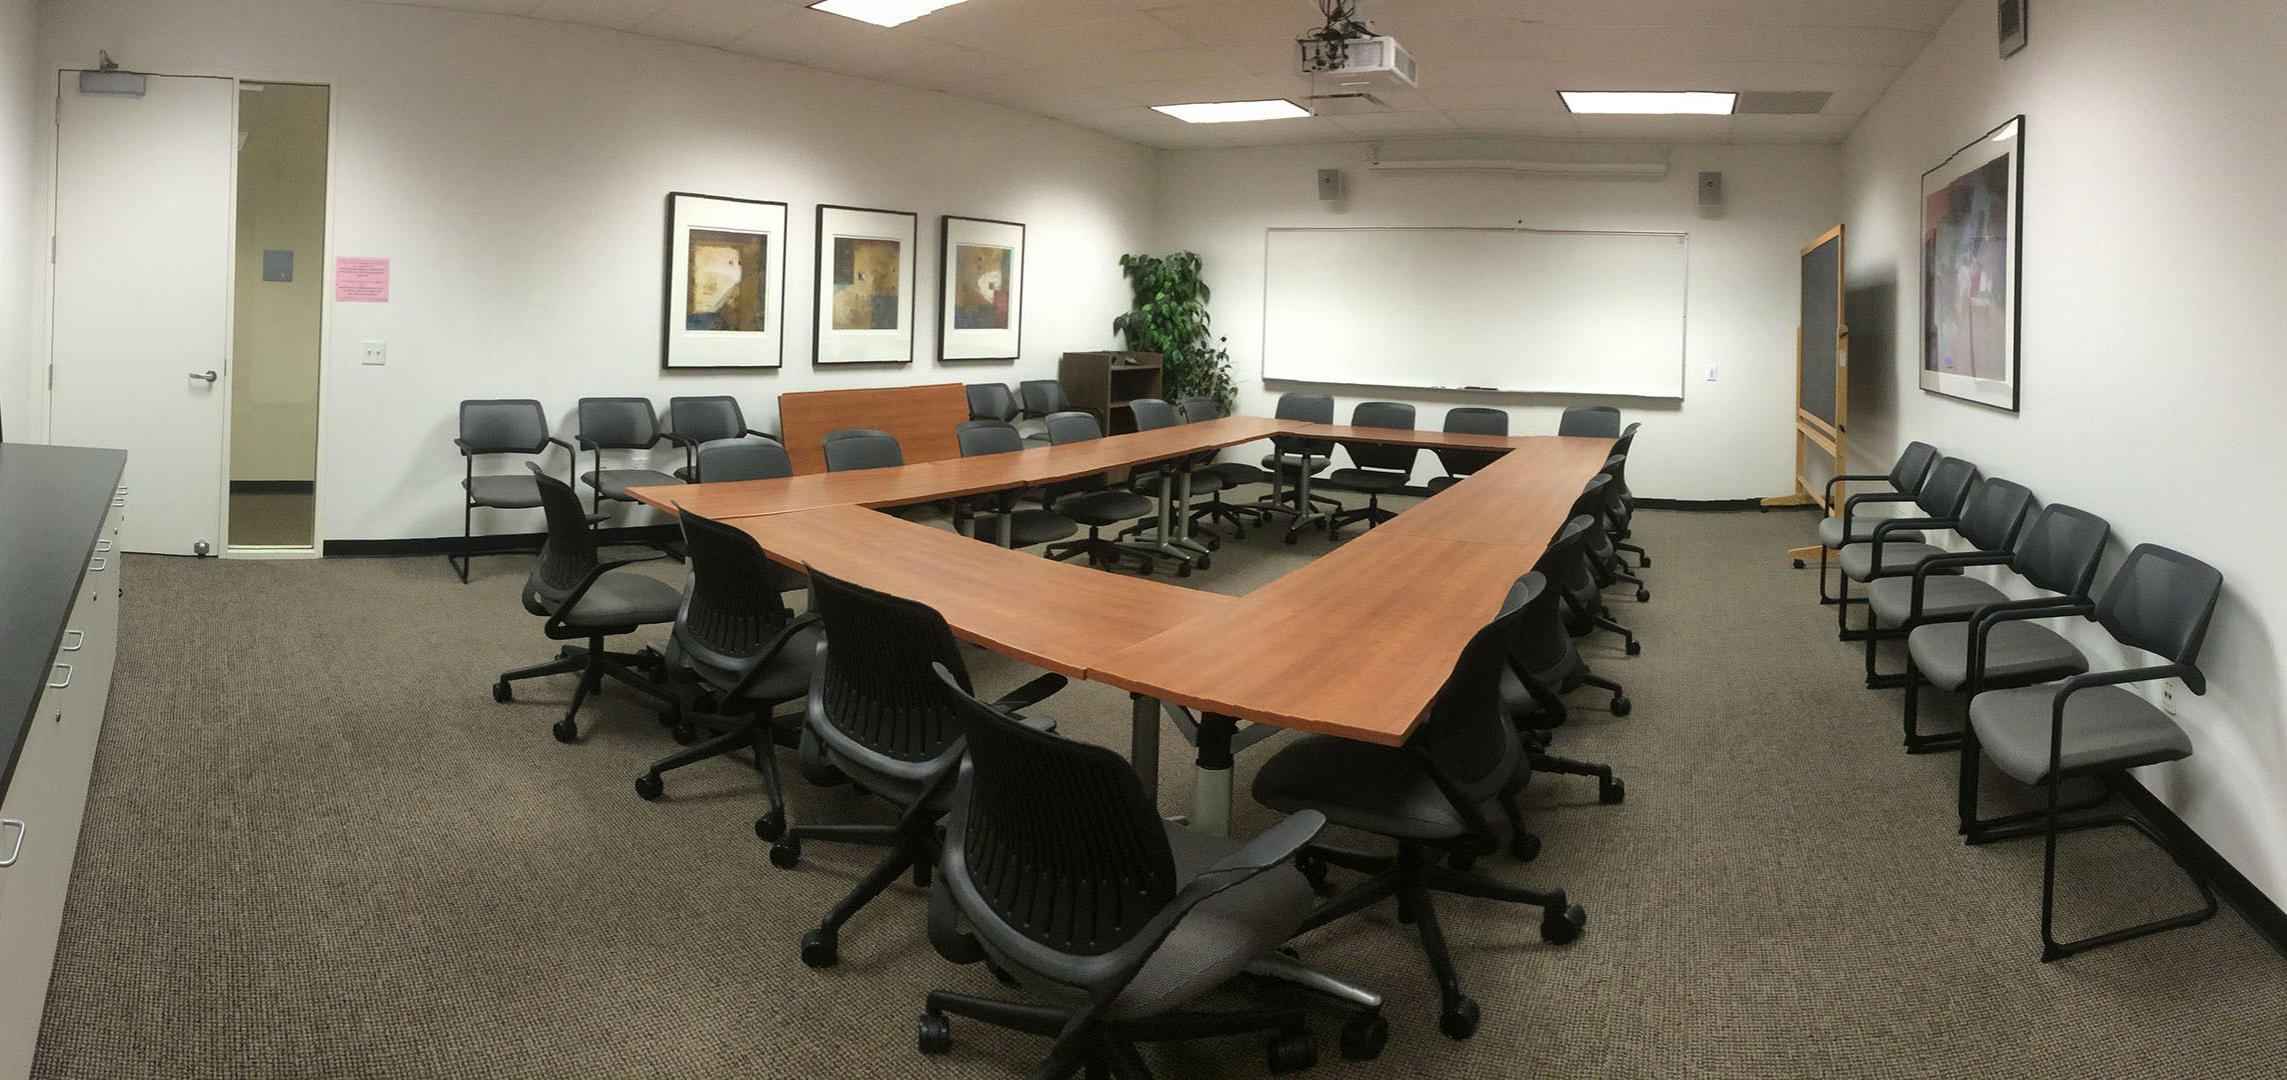 An empty meeting room.